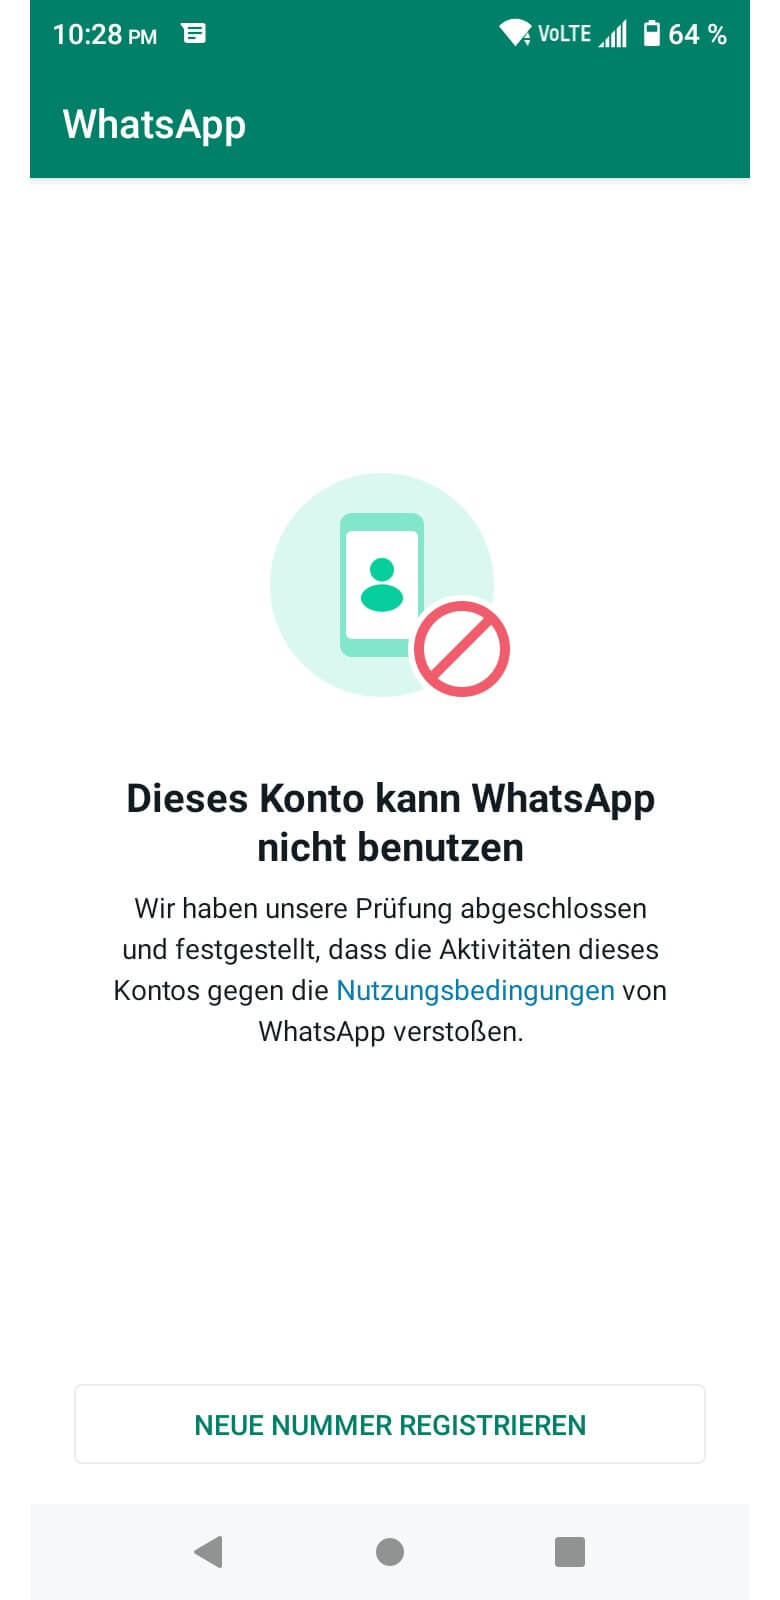 WhatsApp gesperrt: Dein Account wurde gesperrt